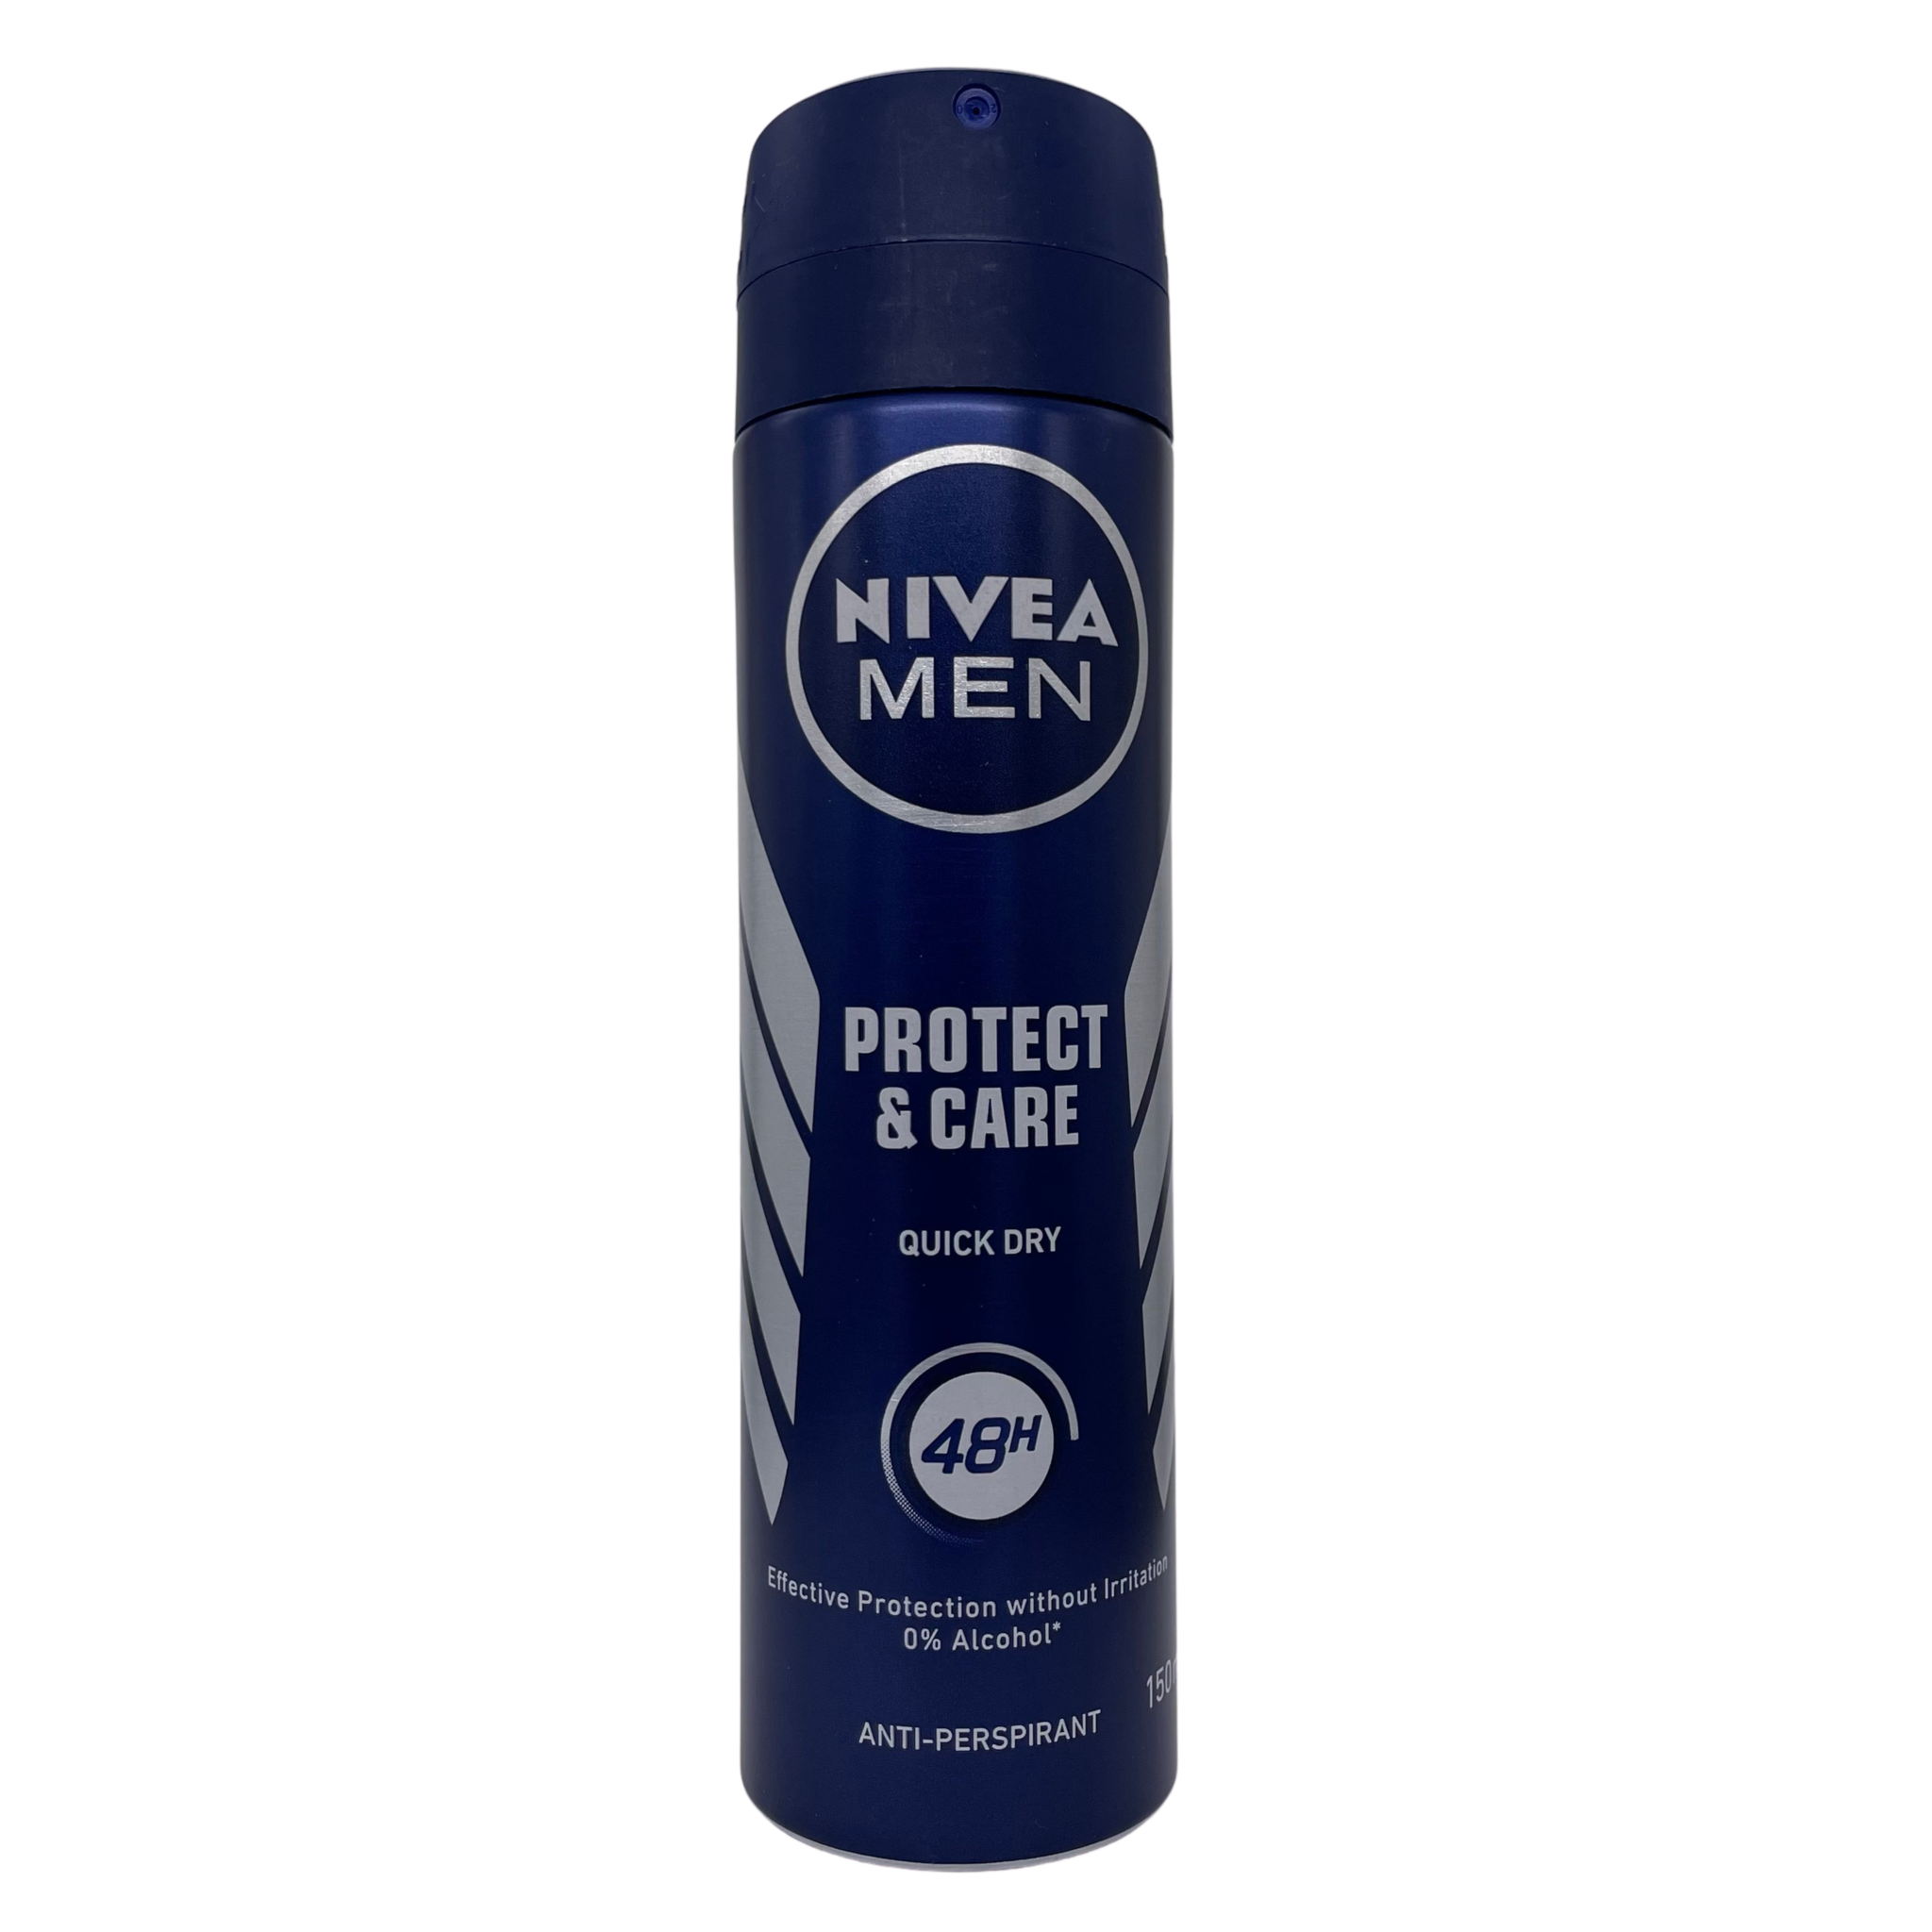 Nivea Men Protect & Care deodorant spray 150ml